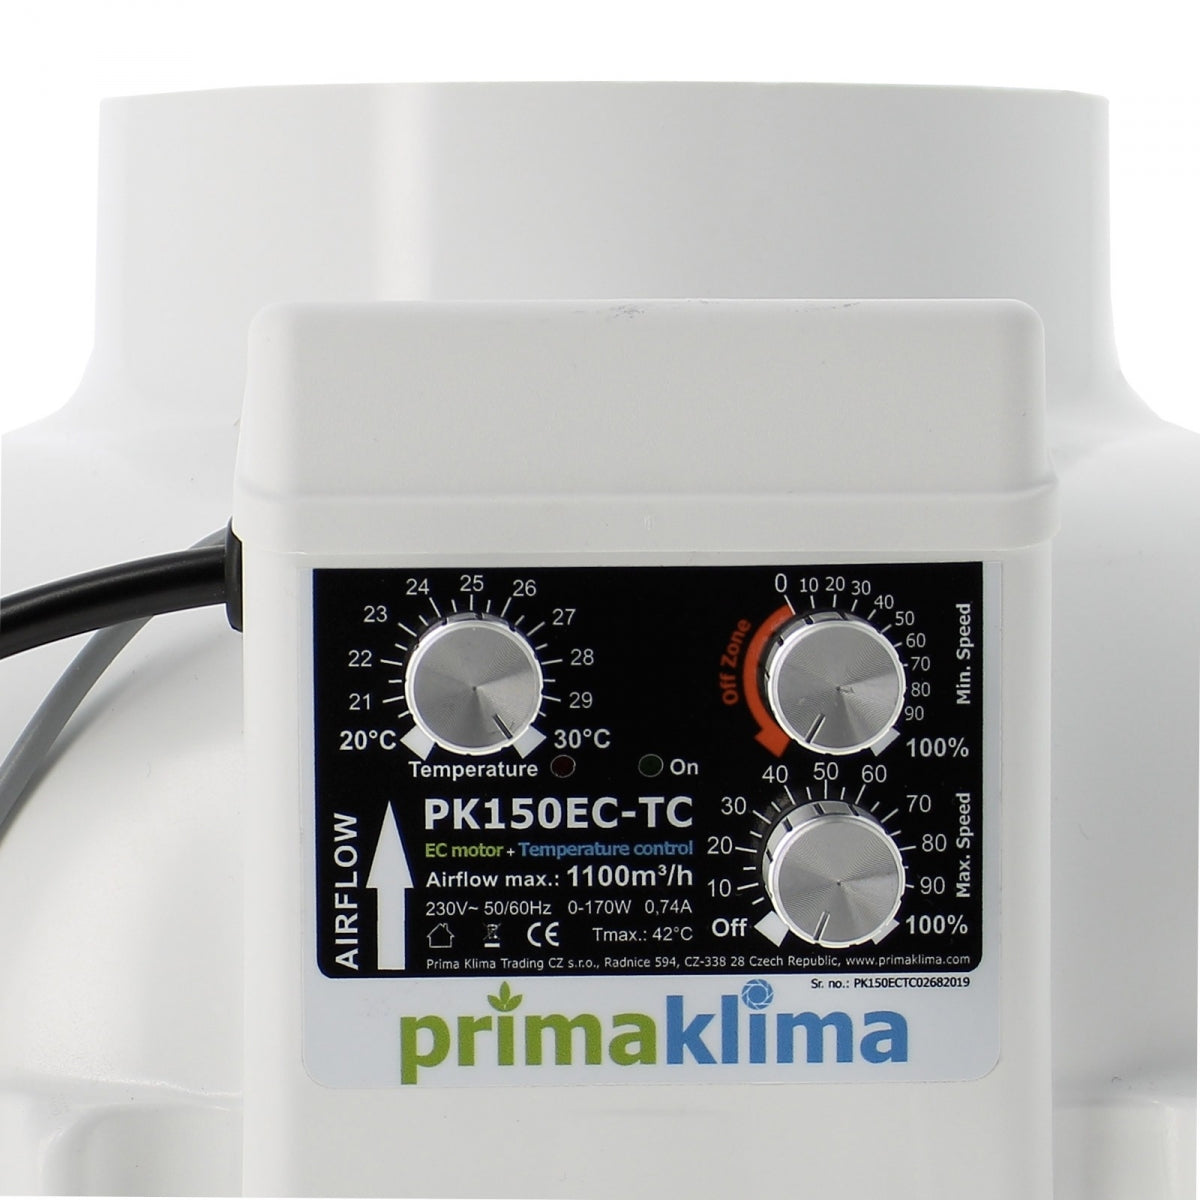 Absaugung PK150EC-TC 1100 m3/h – Ø 150 mm – Prima Klima